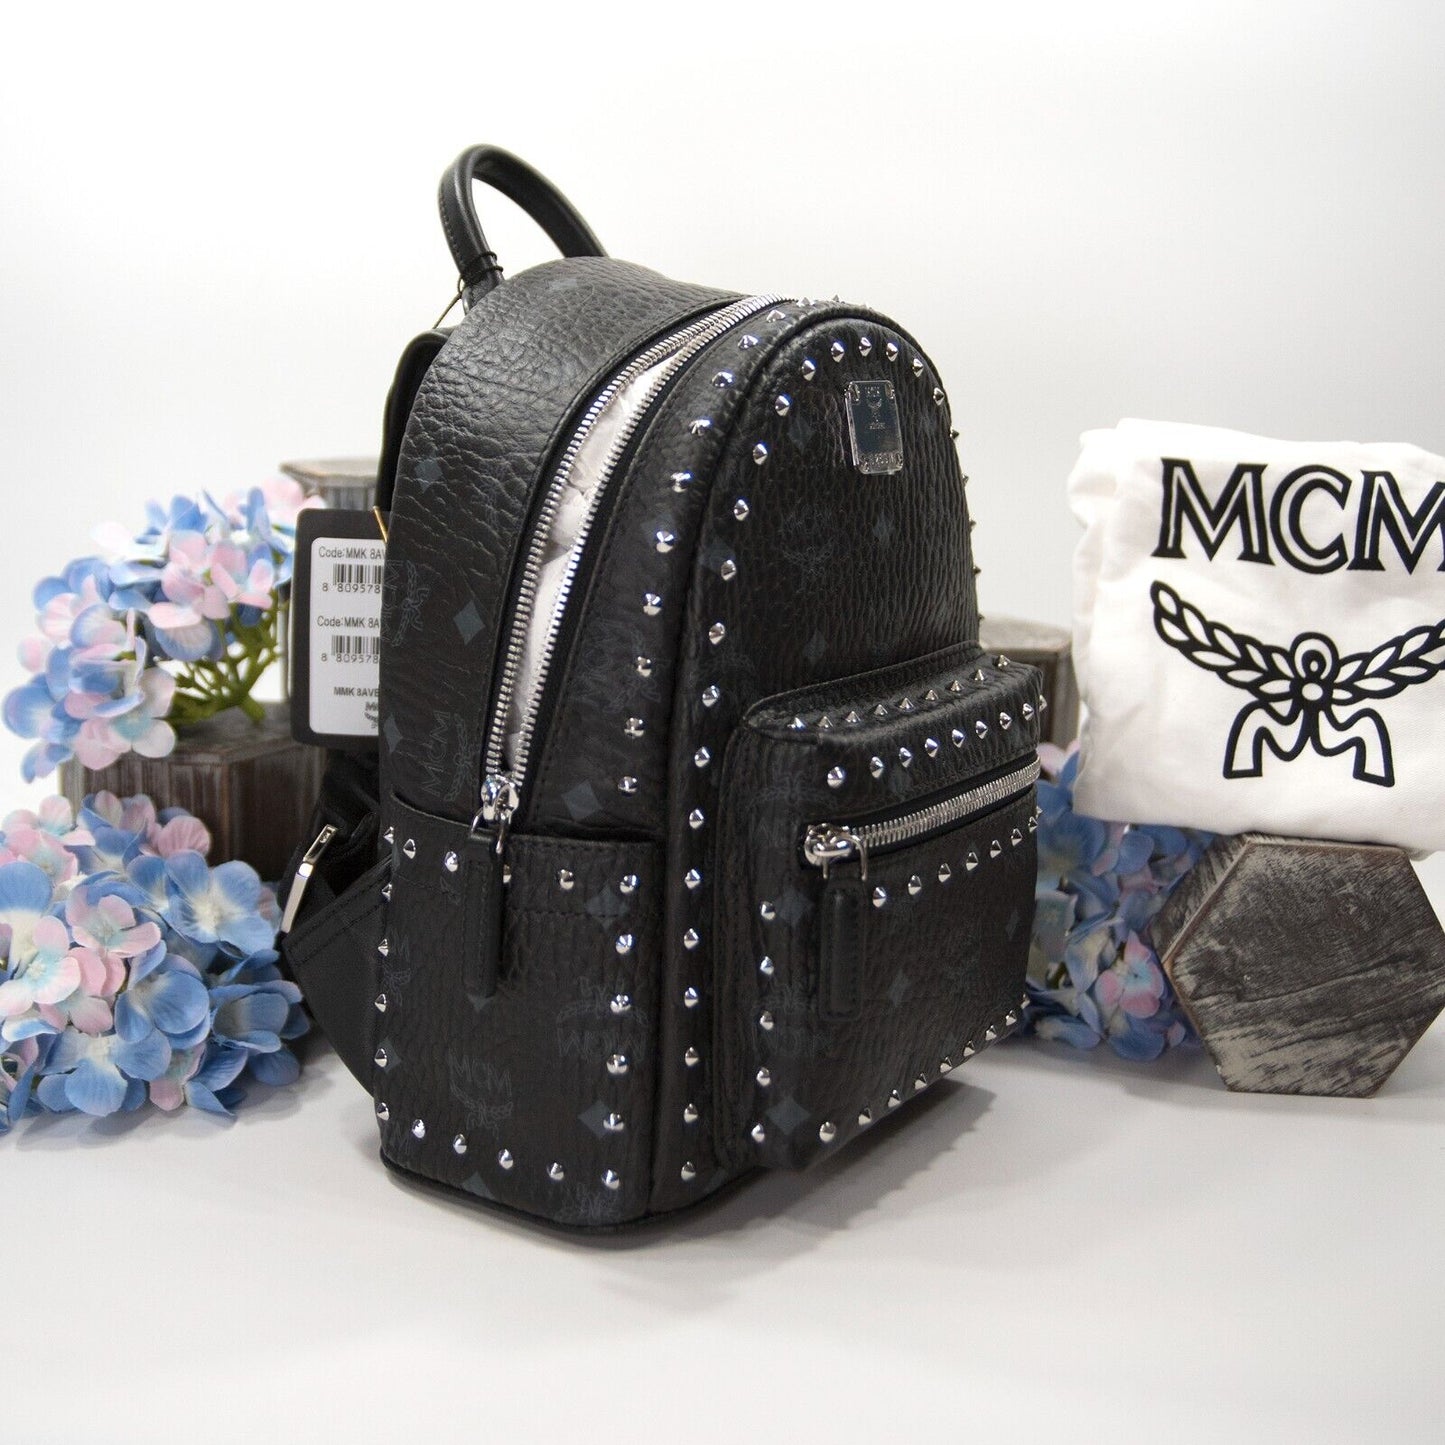 MCM Black Studded Viisetos Leather Backpack Book Bag NWT